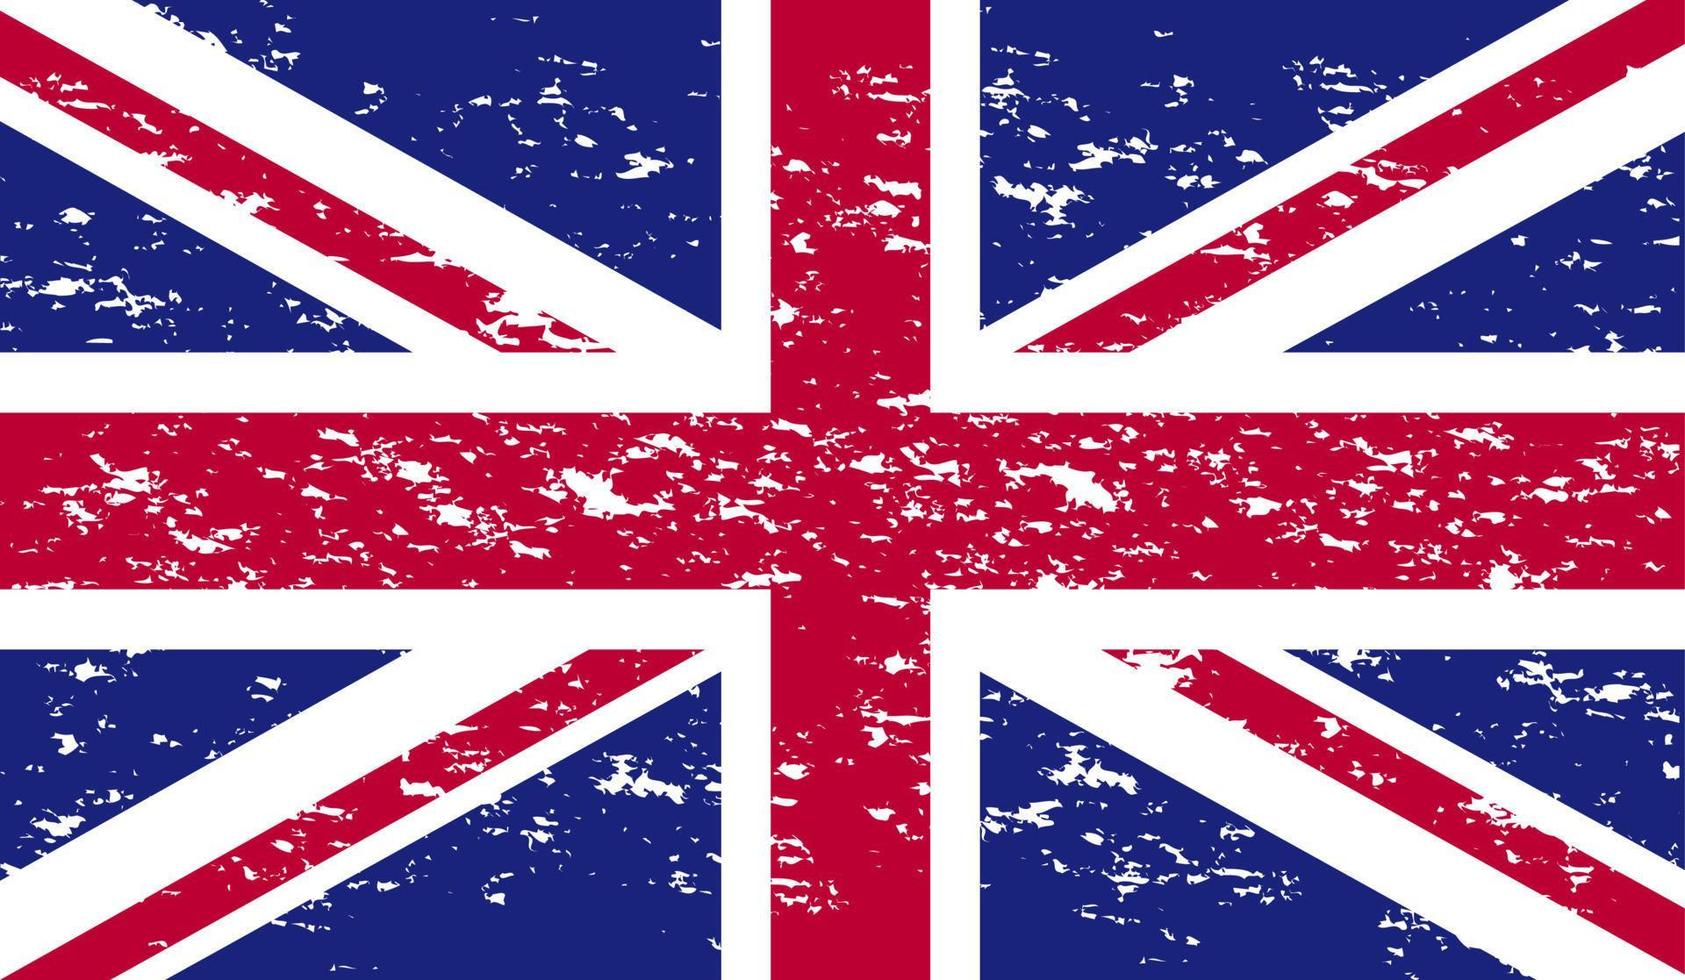 Grunge UK flag.Vector British flag. UK flag in grungy style.Vector Union Jack grunge flag. vector